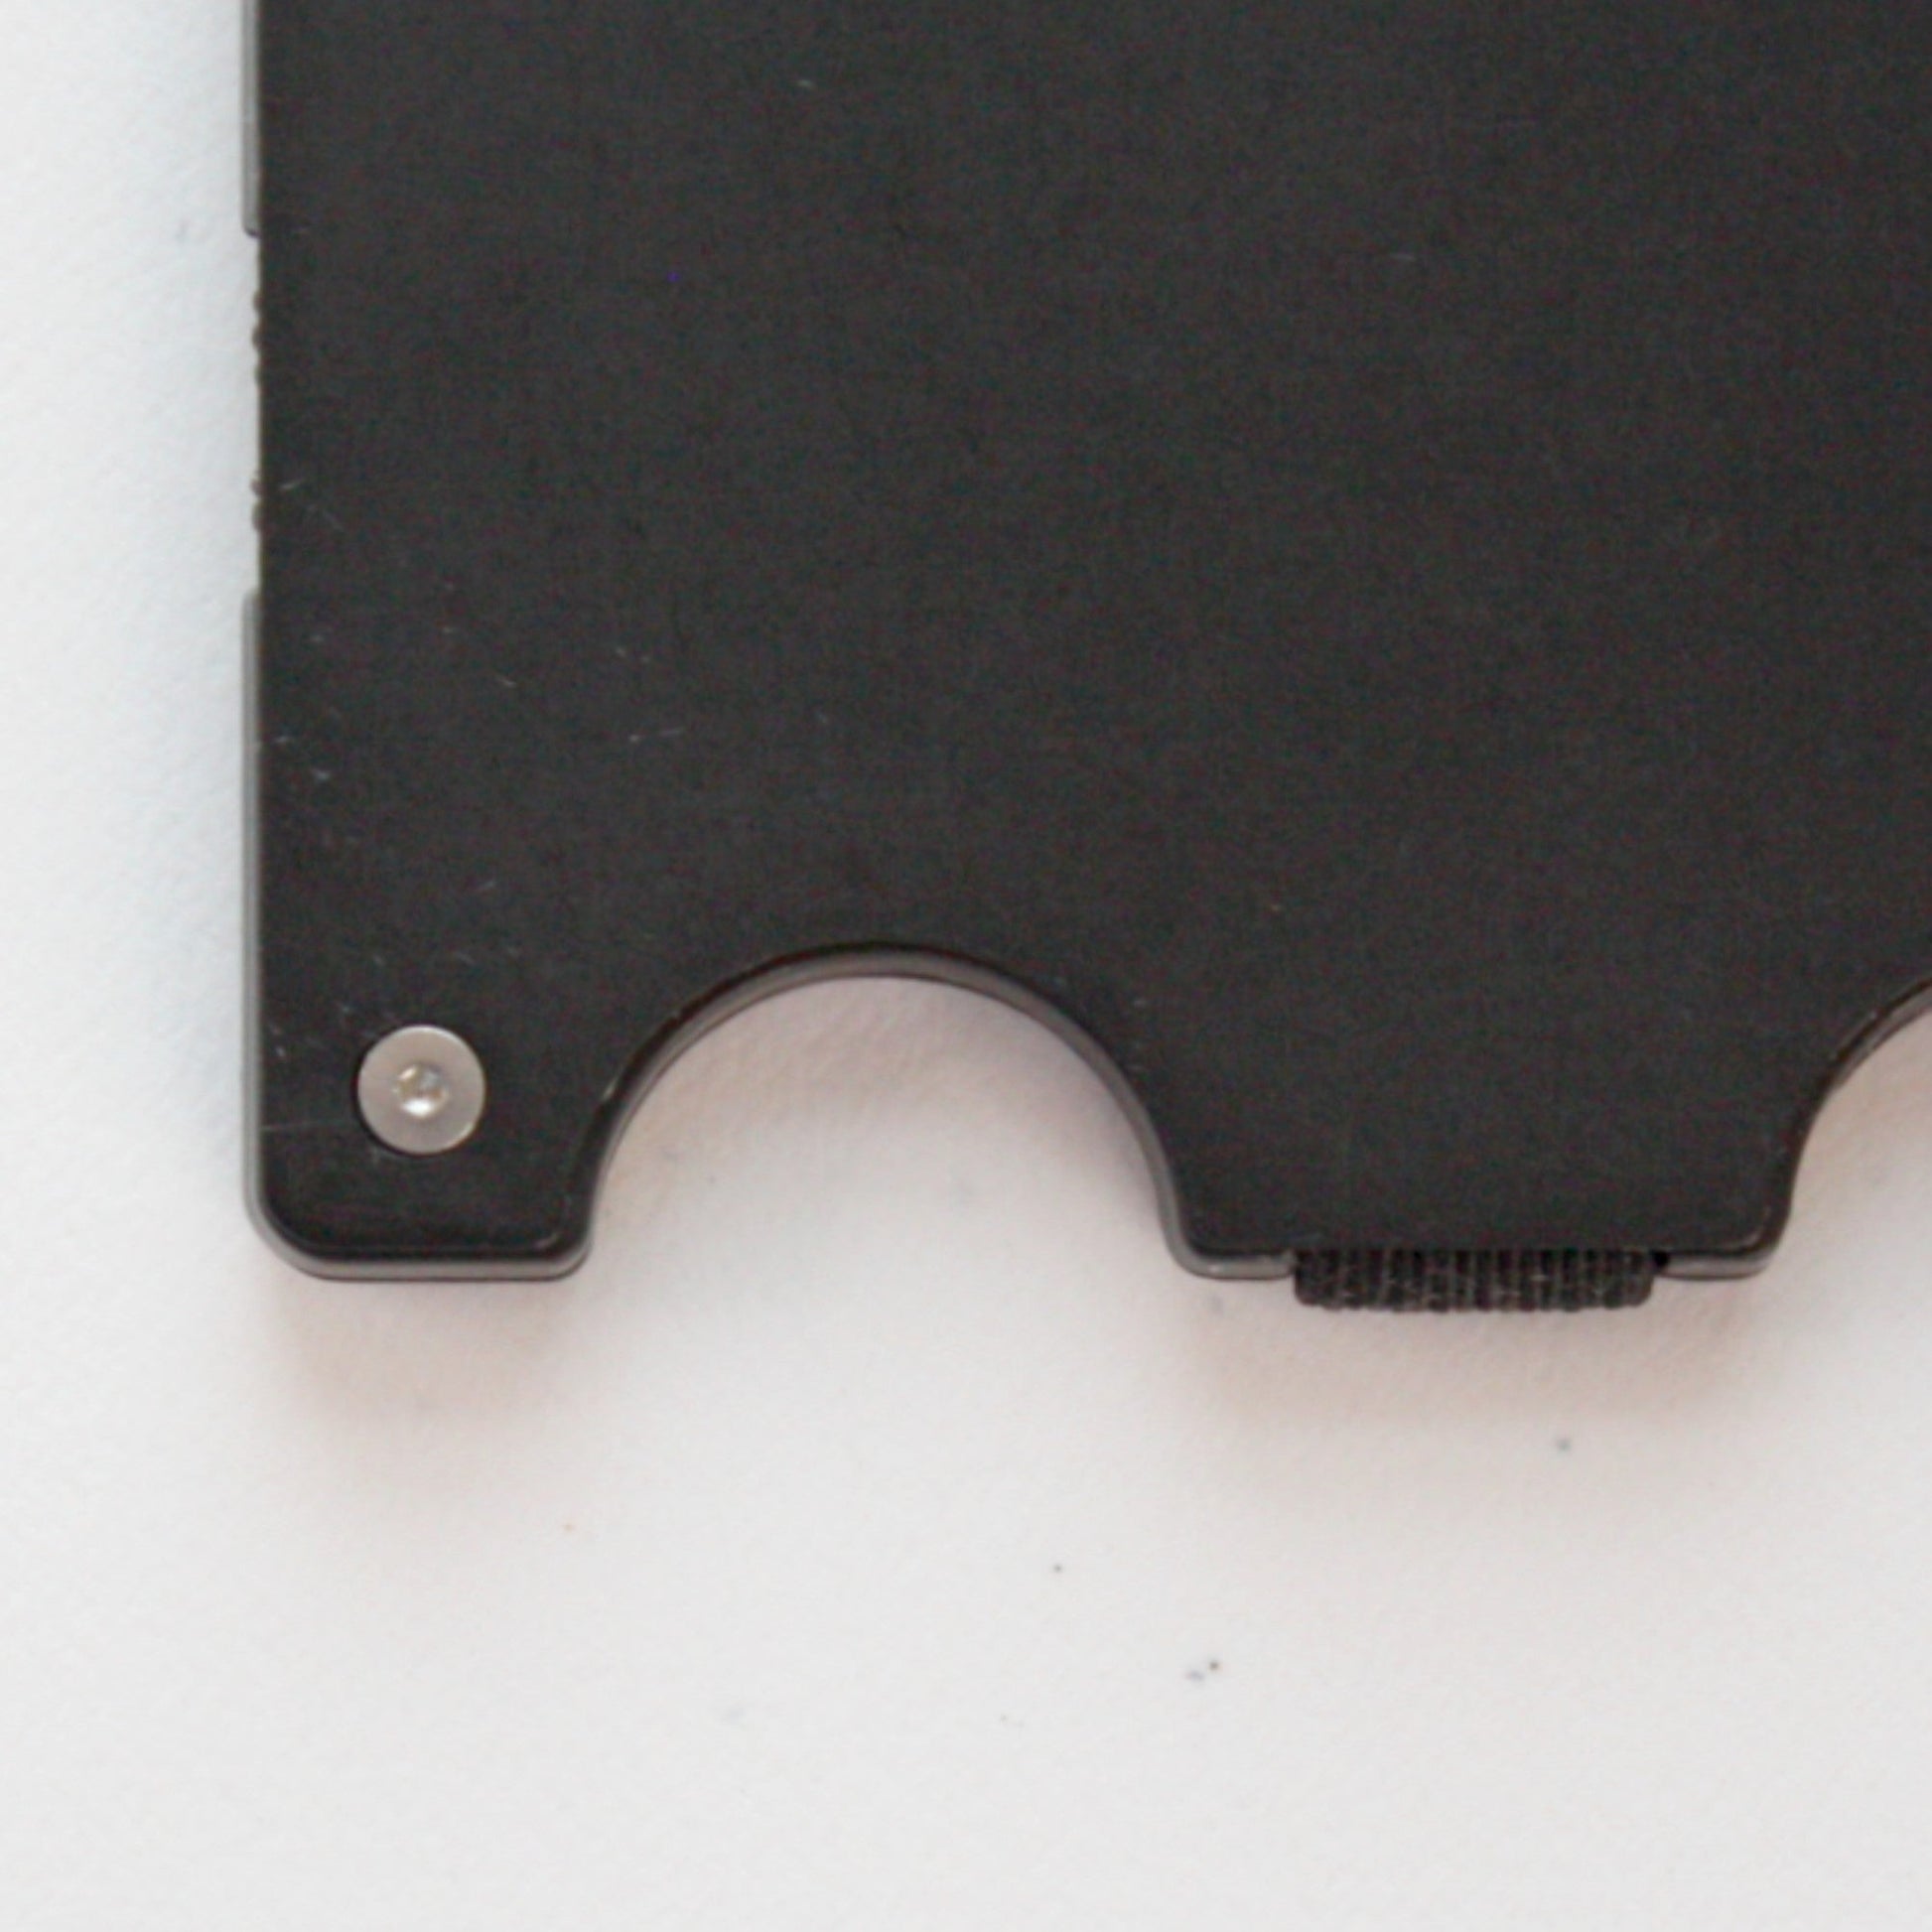 Rift Wallet - Slim Metal RFID Blocking - Proudly Made in The USA